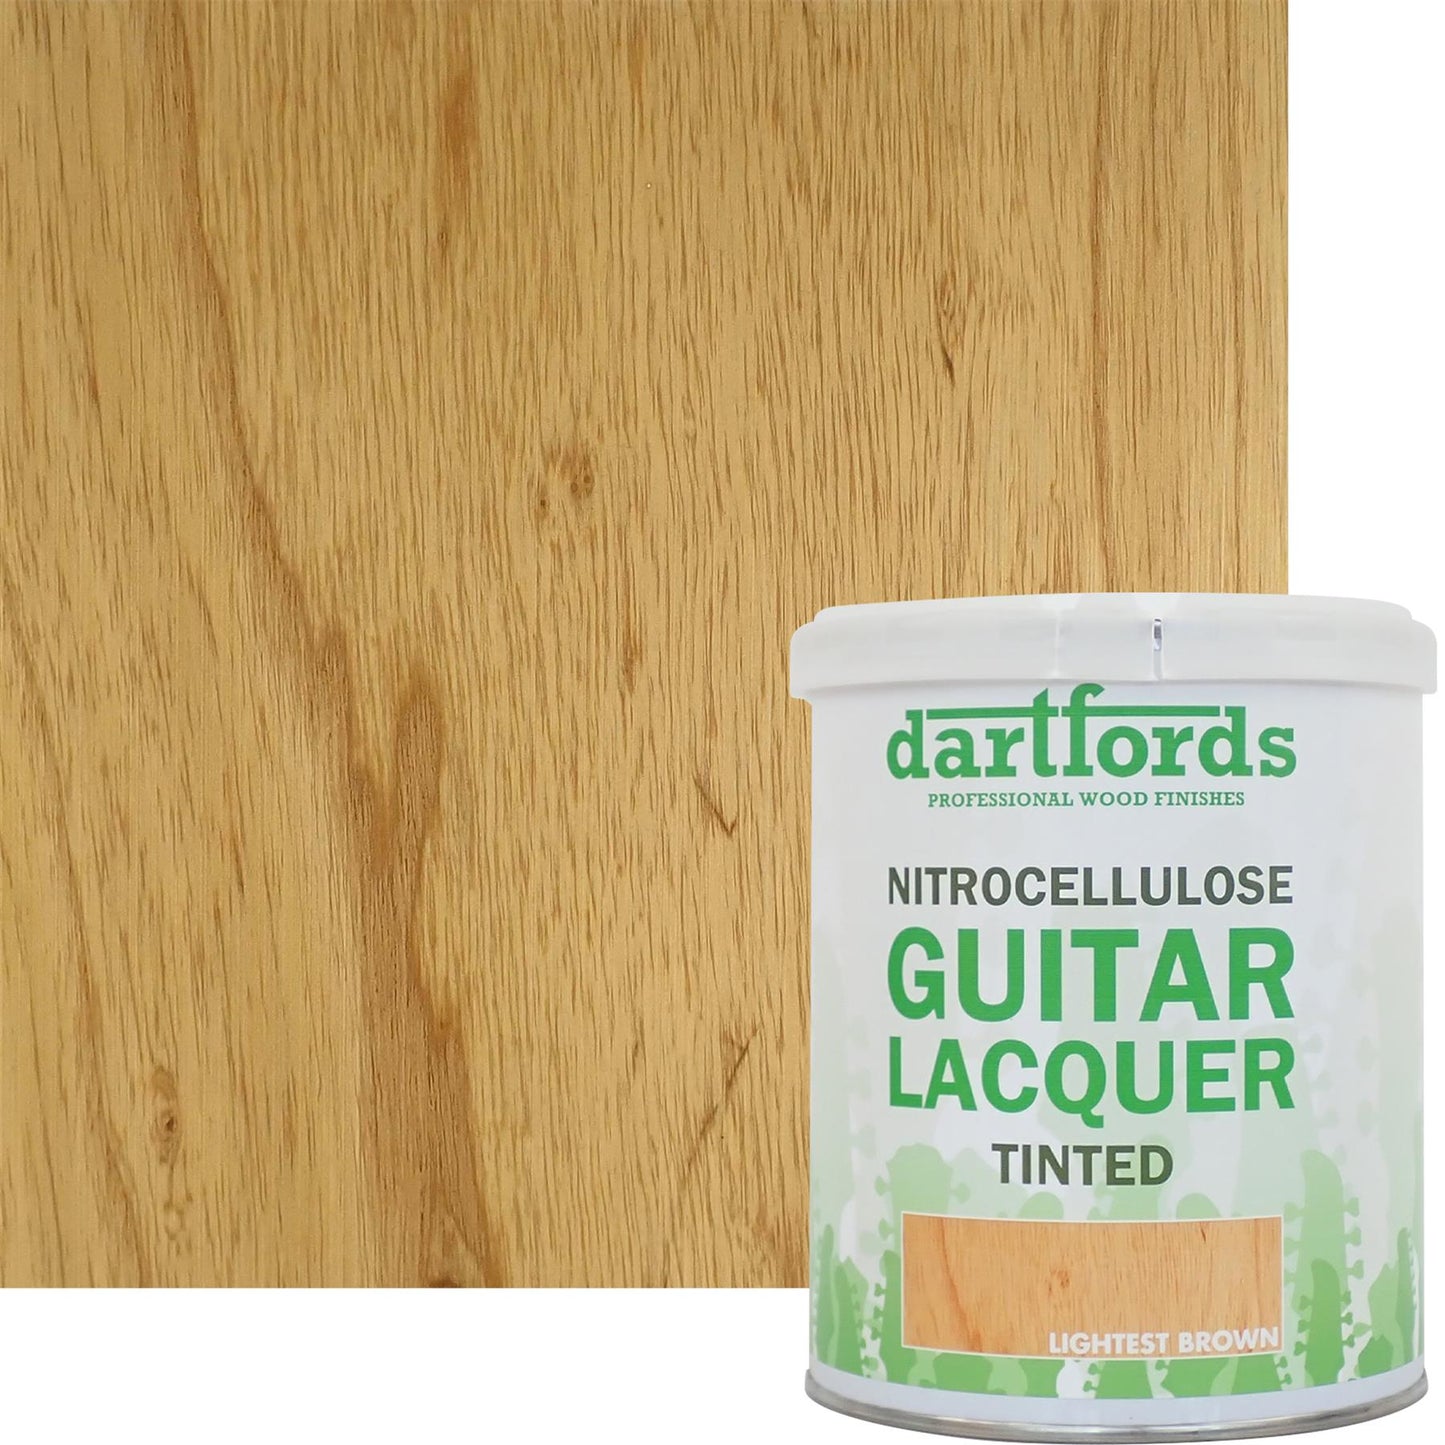 dartfords Lightest Brown Nitrocellulose Guitar Lacquer - 1 litre Tin